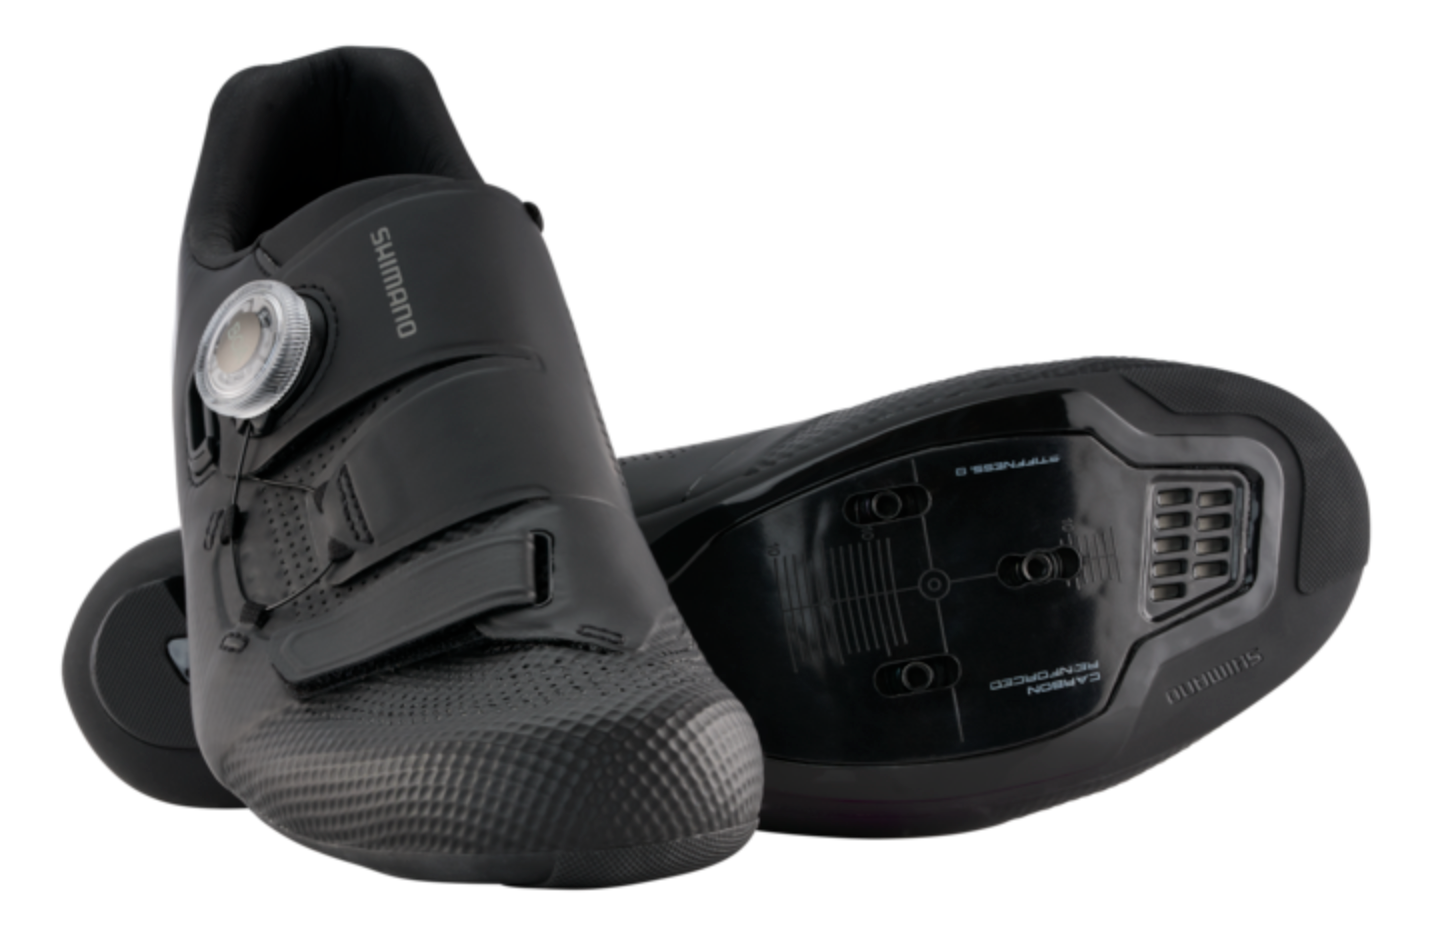 NEW Shimano SH-RC502 Road Bike Shoe, Carbon, SPD-SL, 3-Bolt